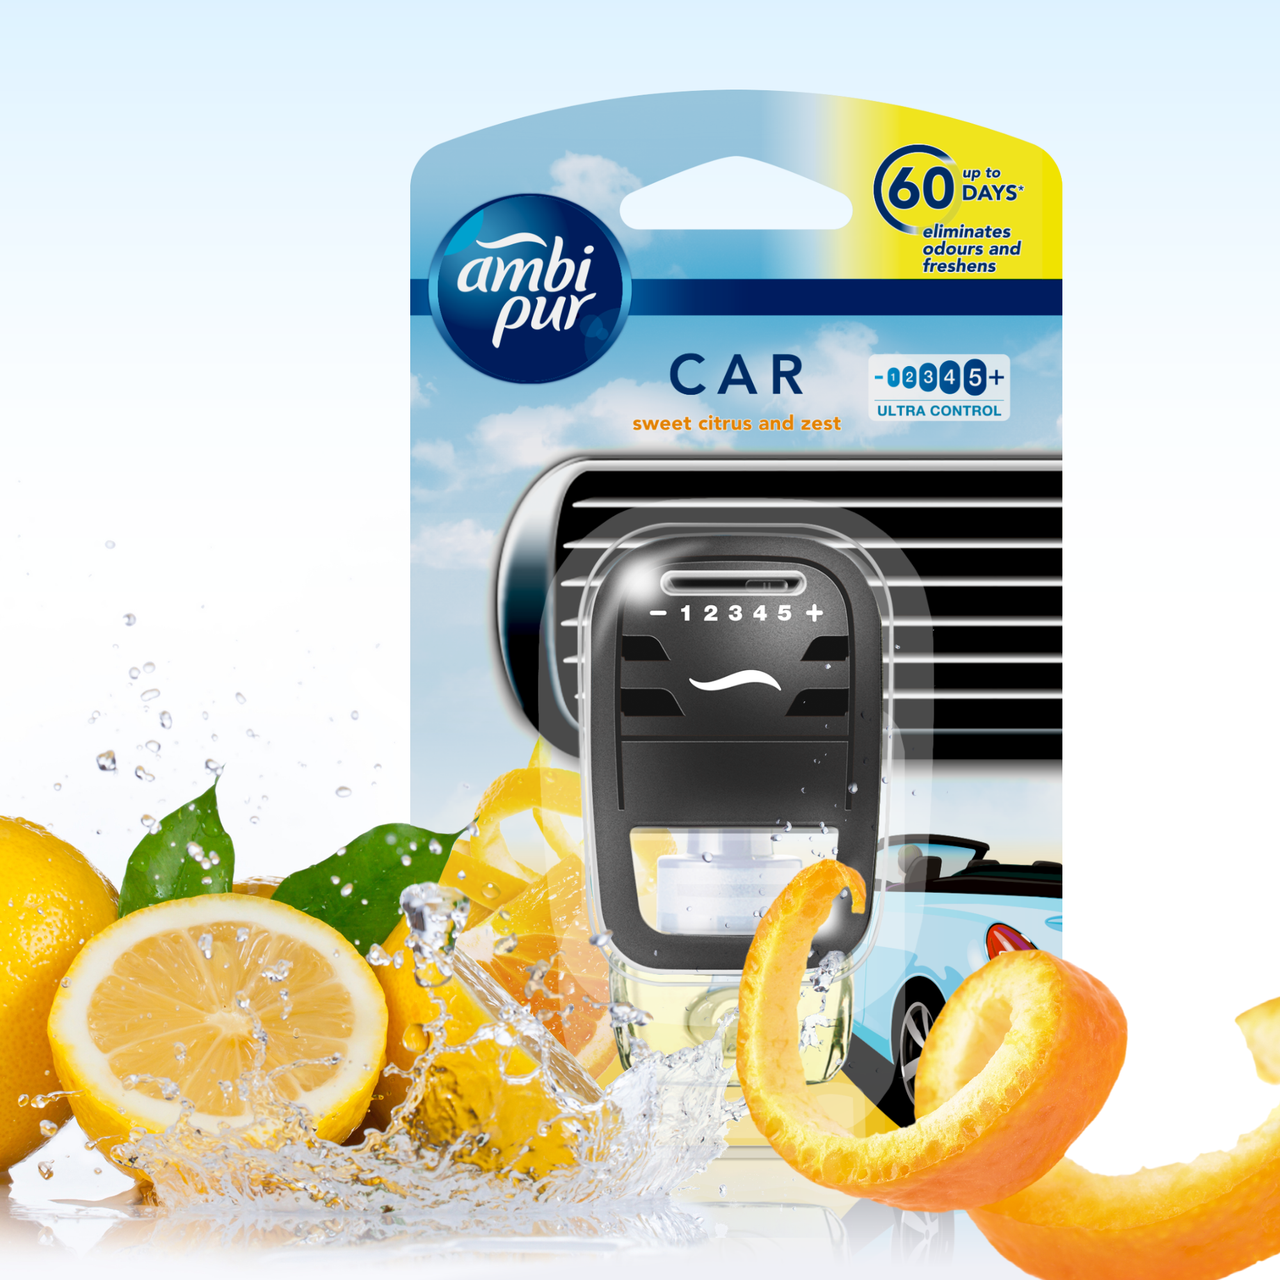 Concept Car Perfume Fresh Lemon Air Freshener for Car Freshener